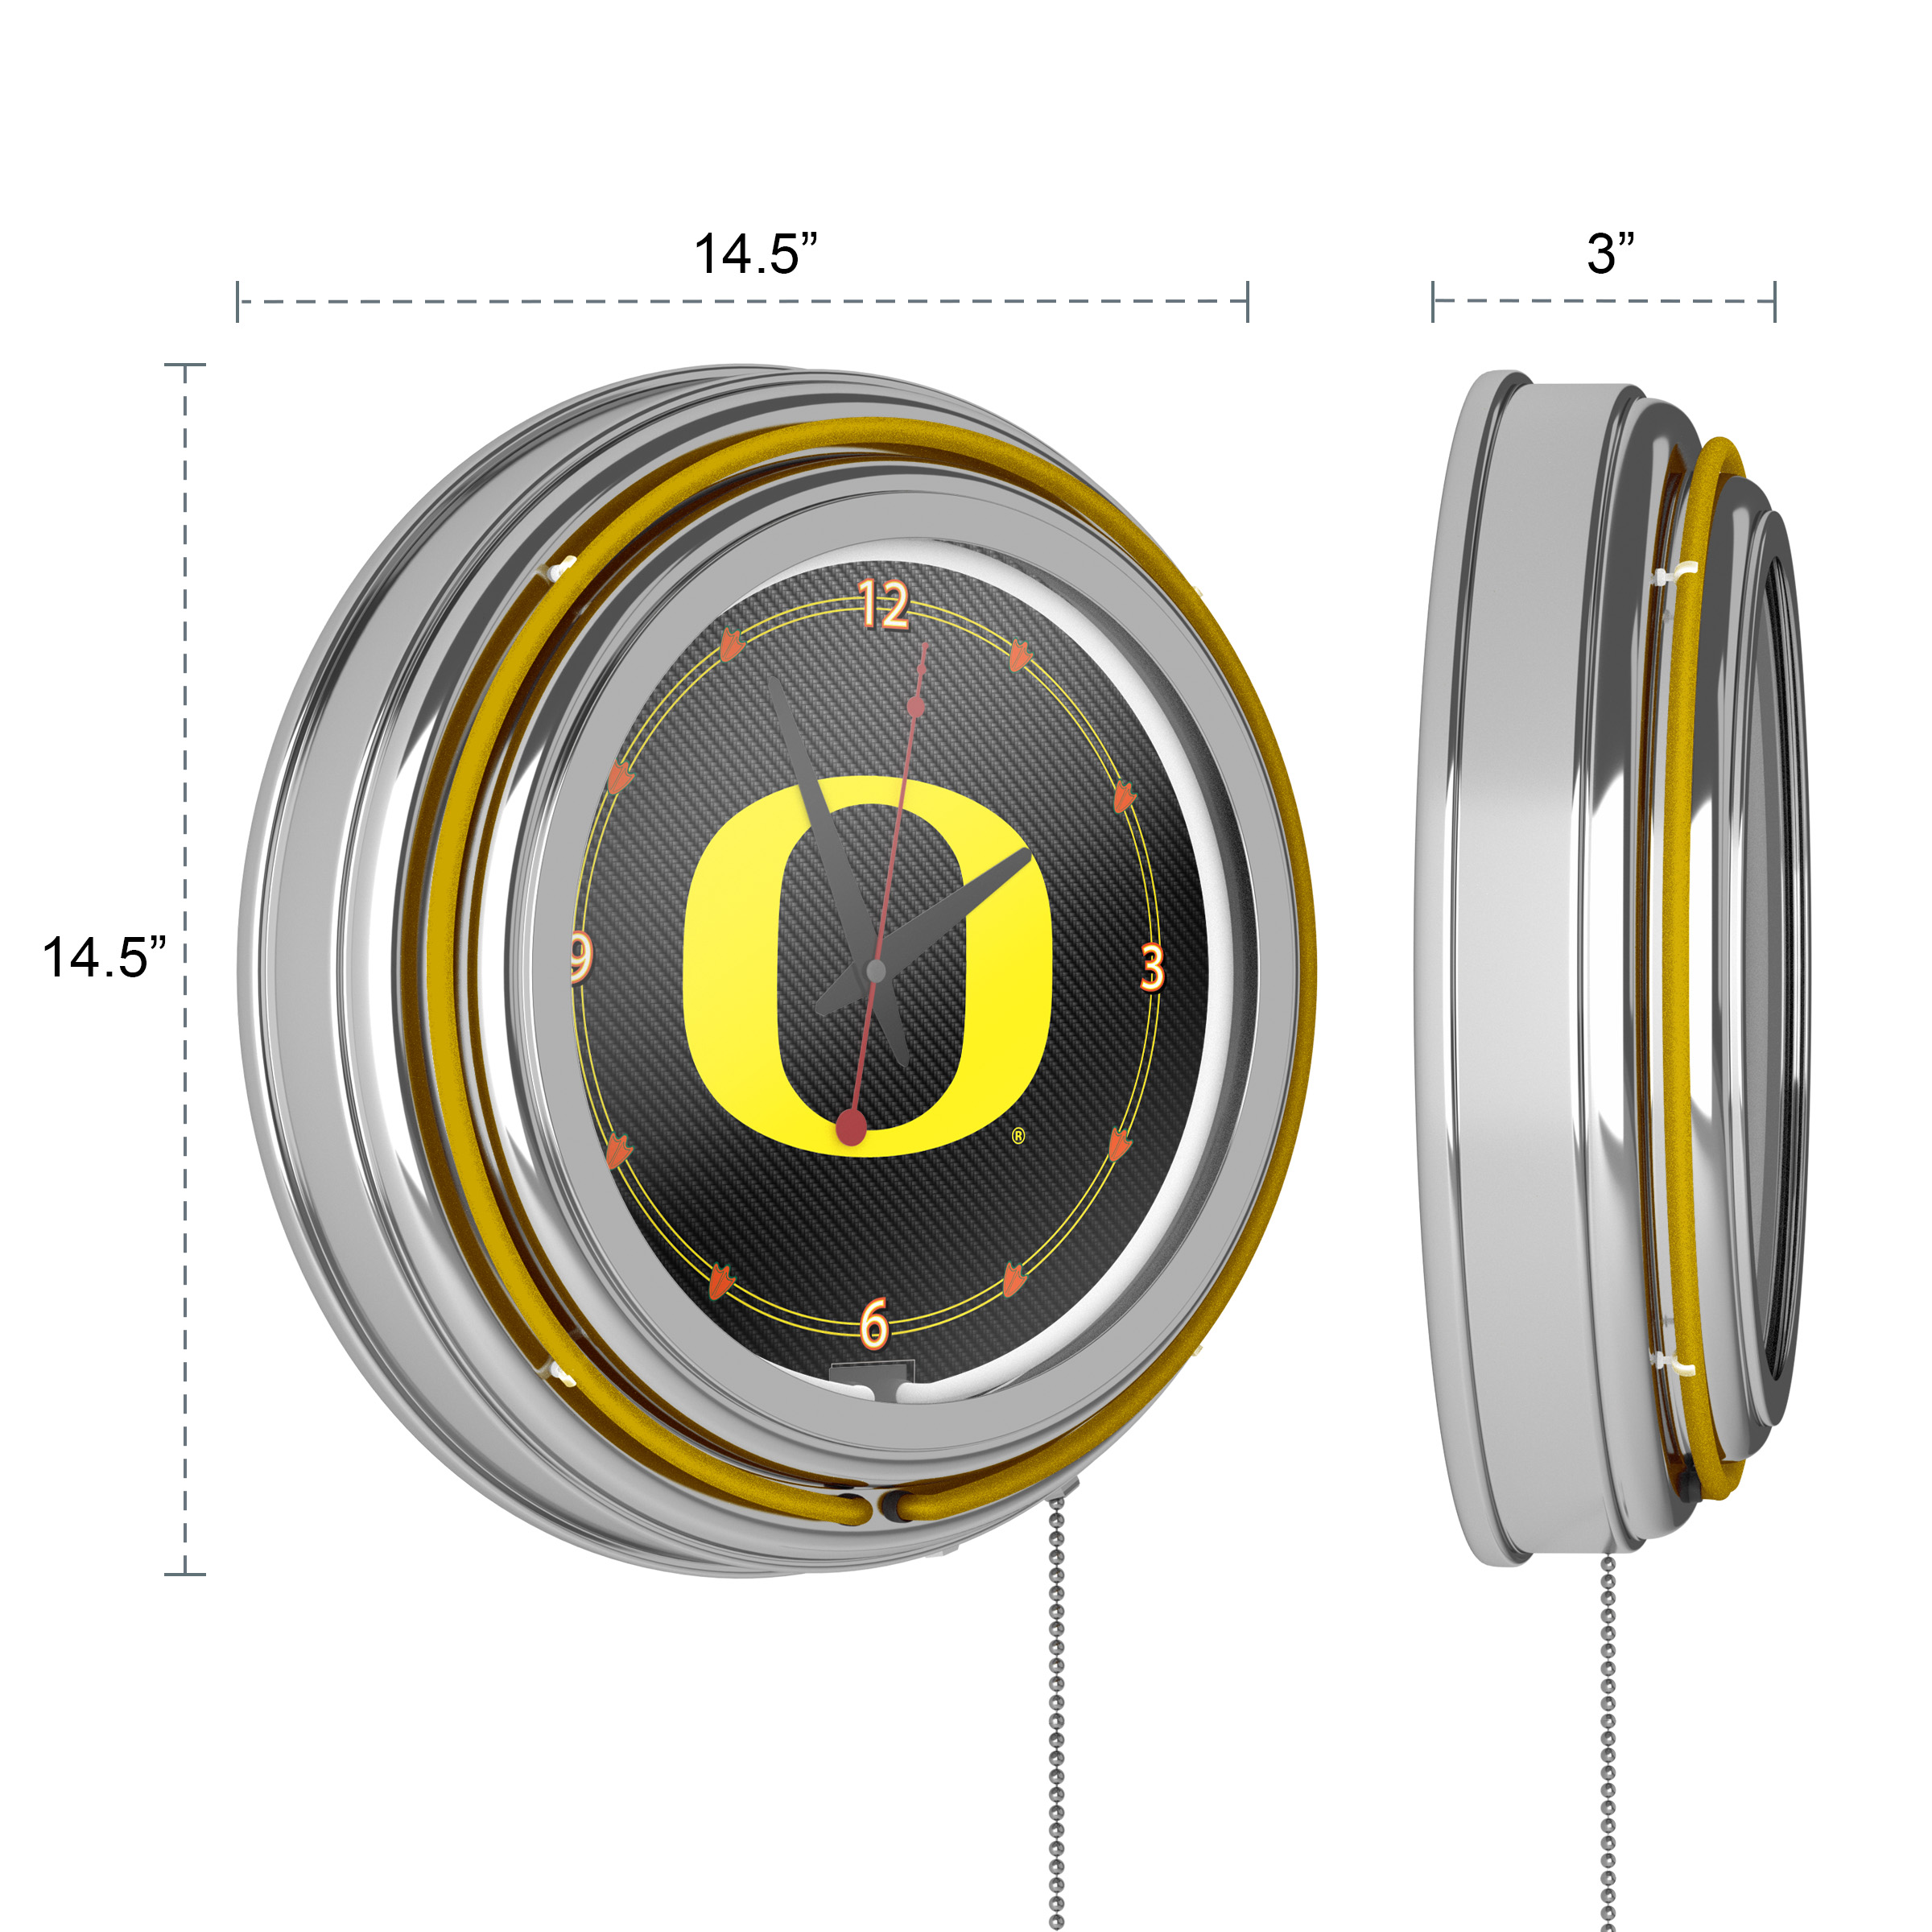 University of Oregon Chrome Double Rung Neon Clock - Carbon Fiber - image 3 of 6